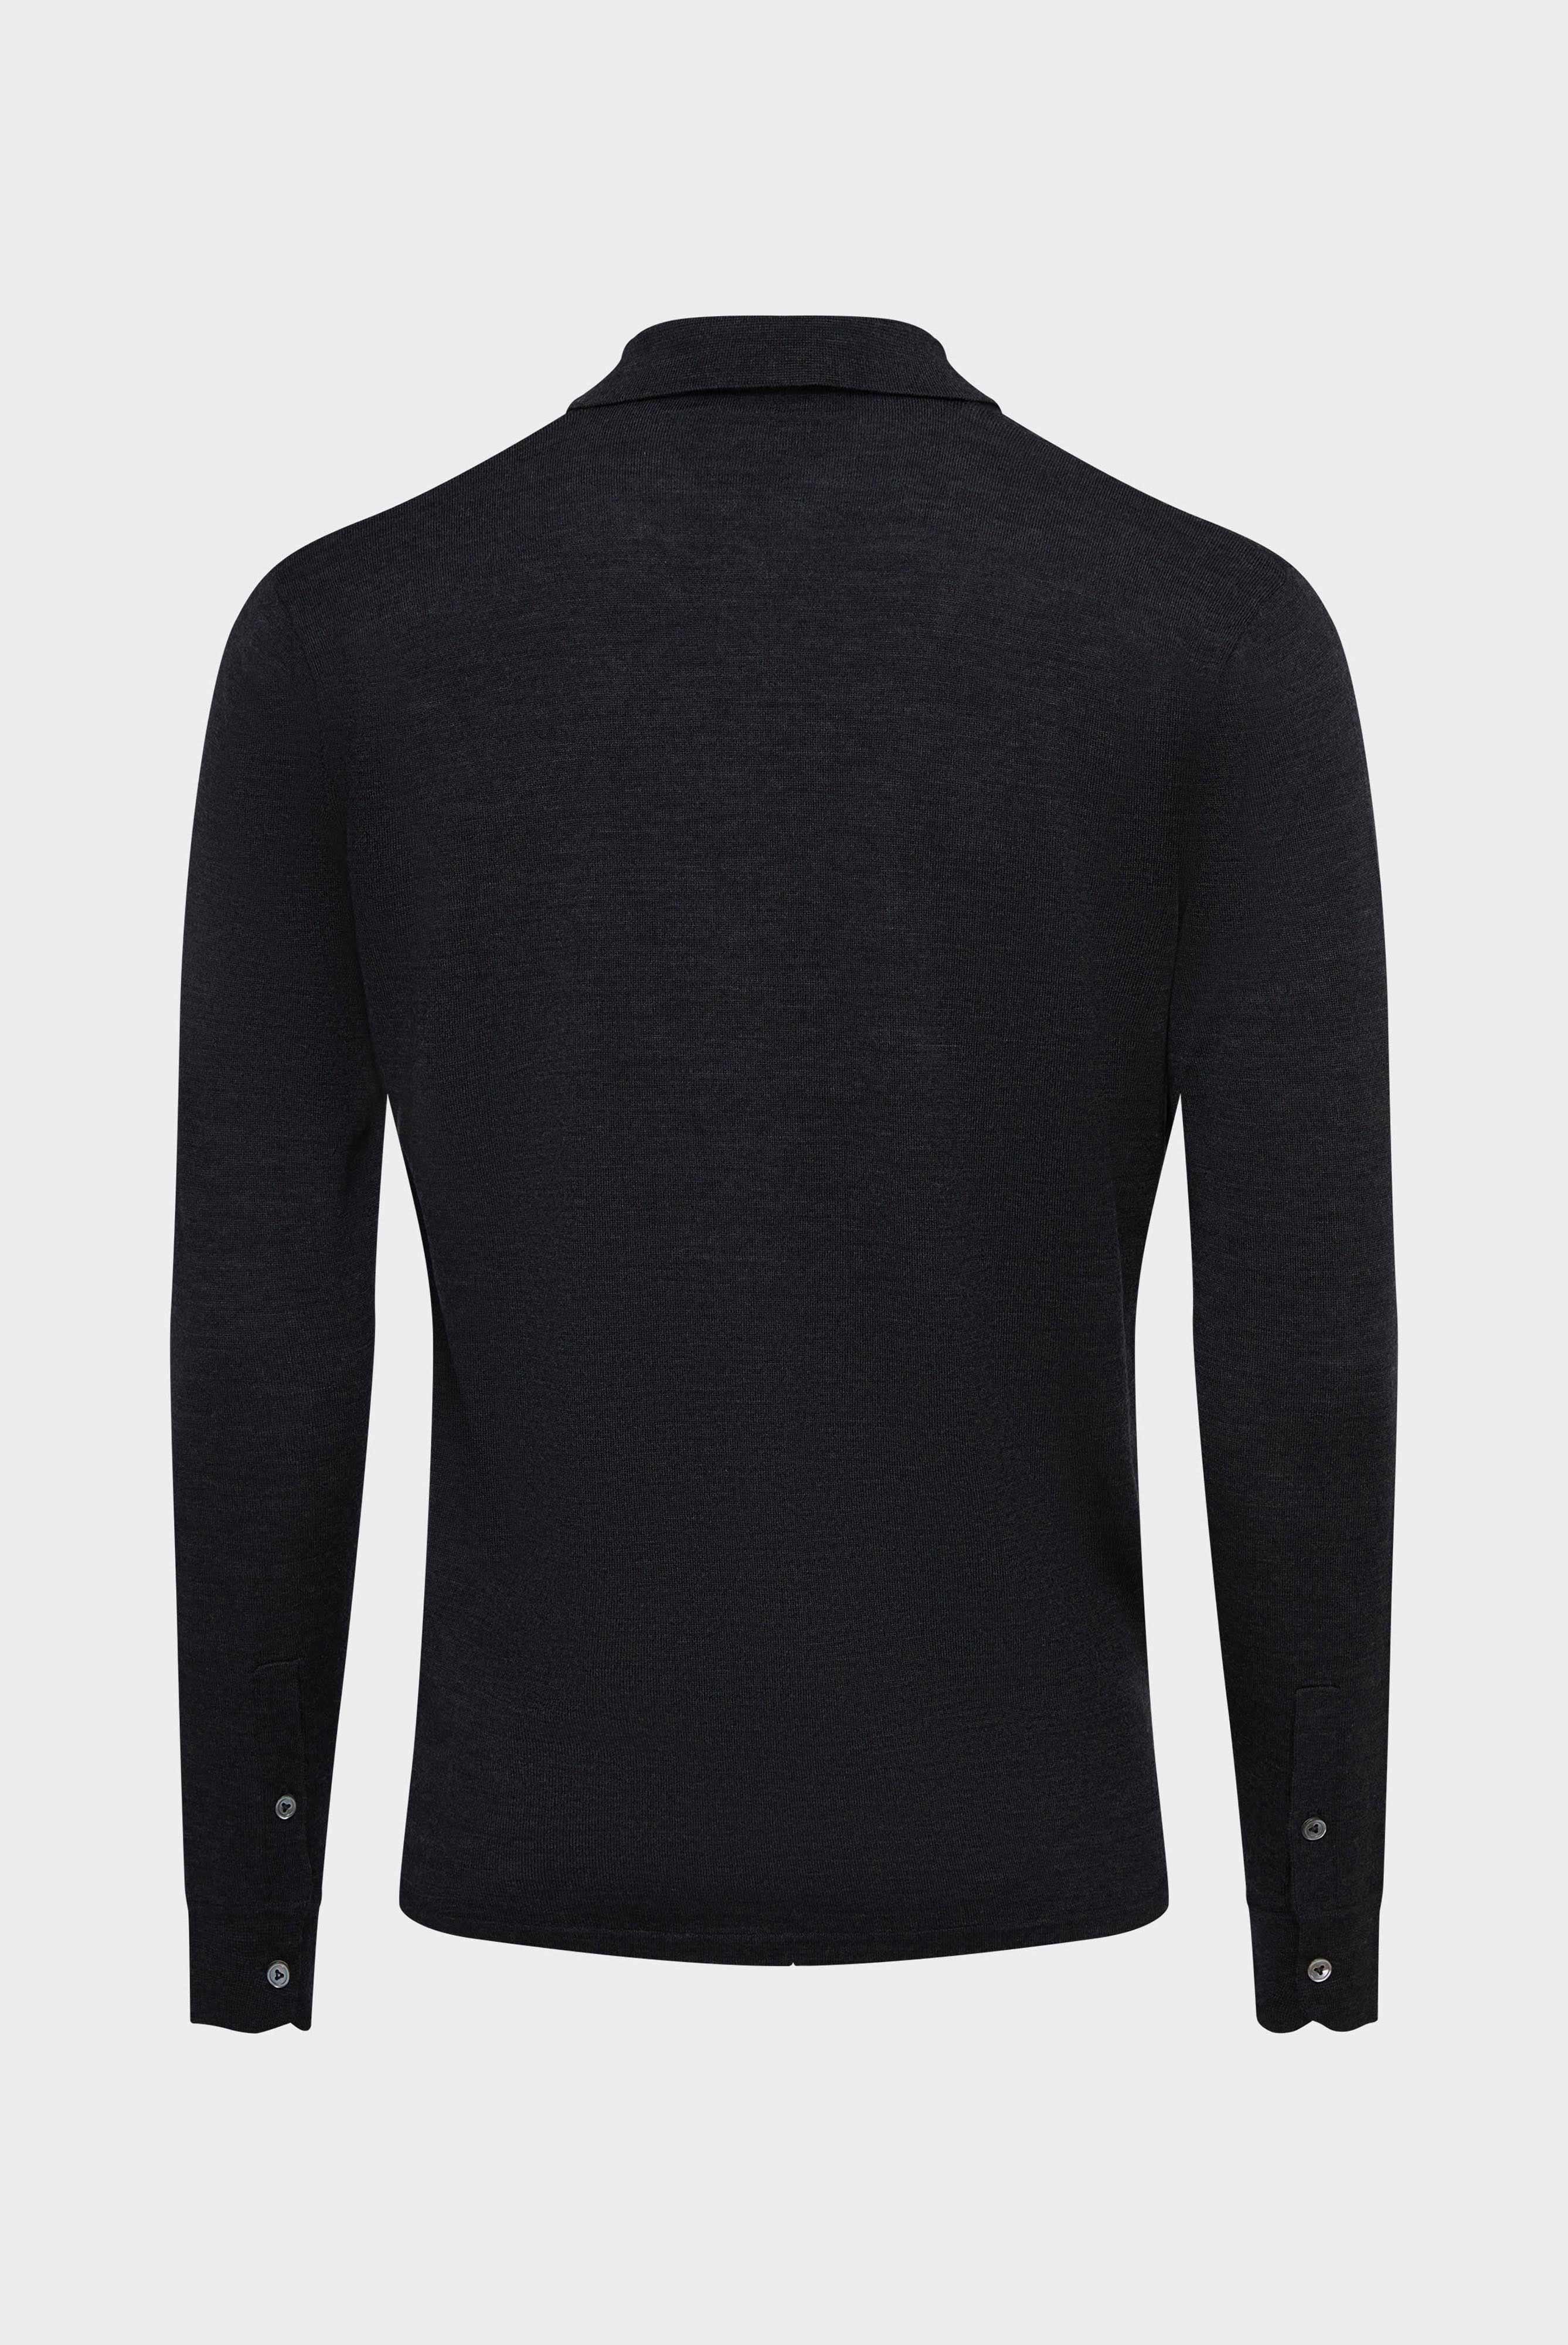 Easy Iron Shirts+Knit Shirt in Ultrafine Merino+82.8611..S00173.080.XS